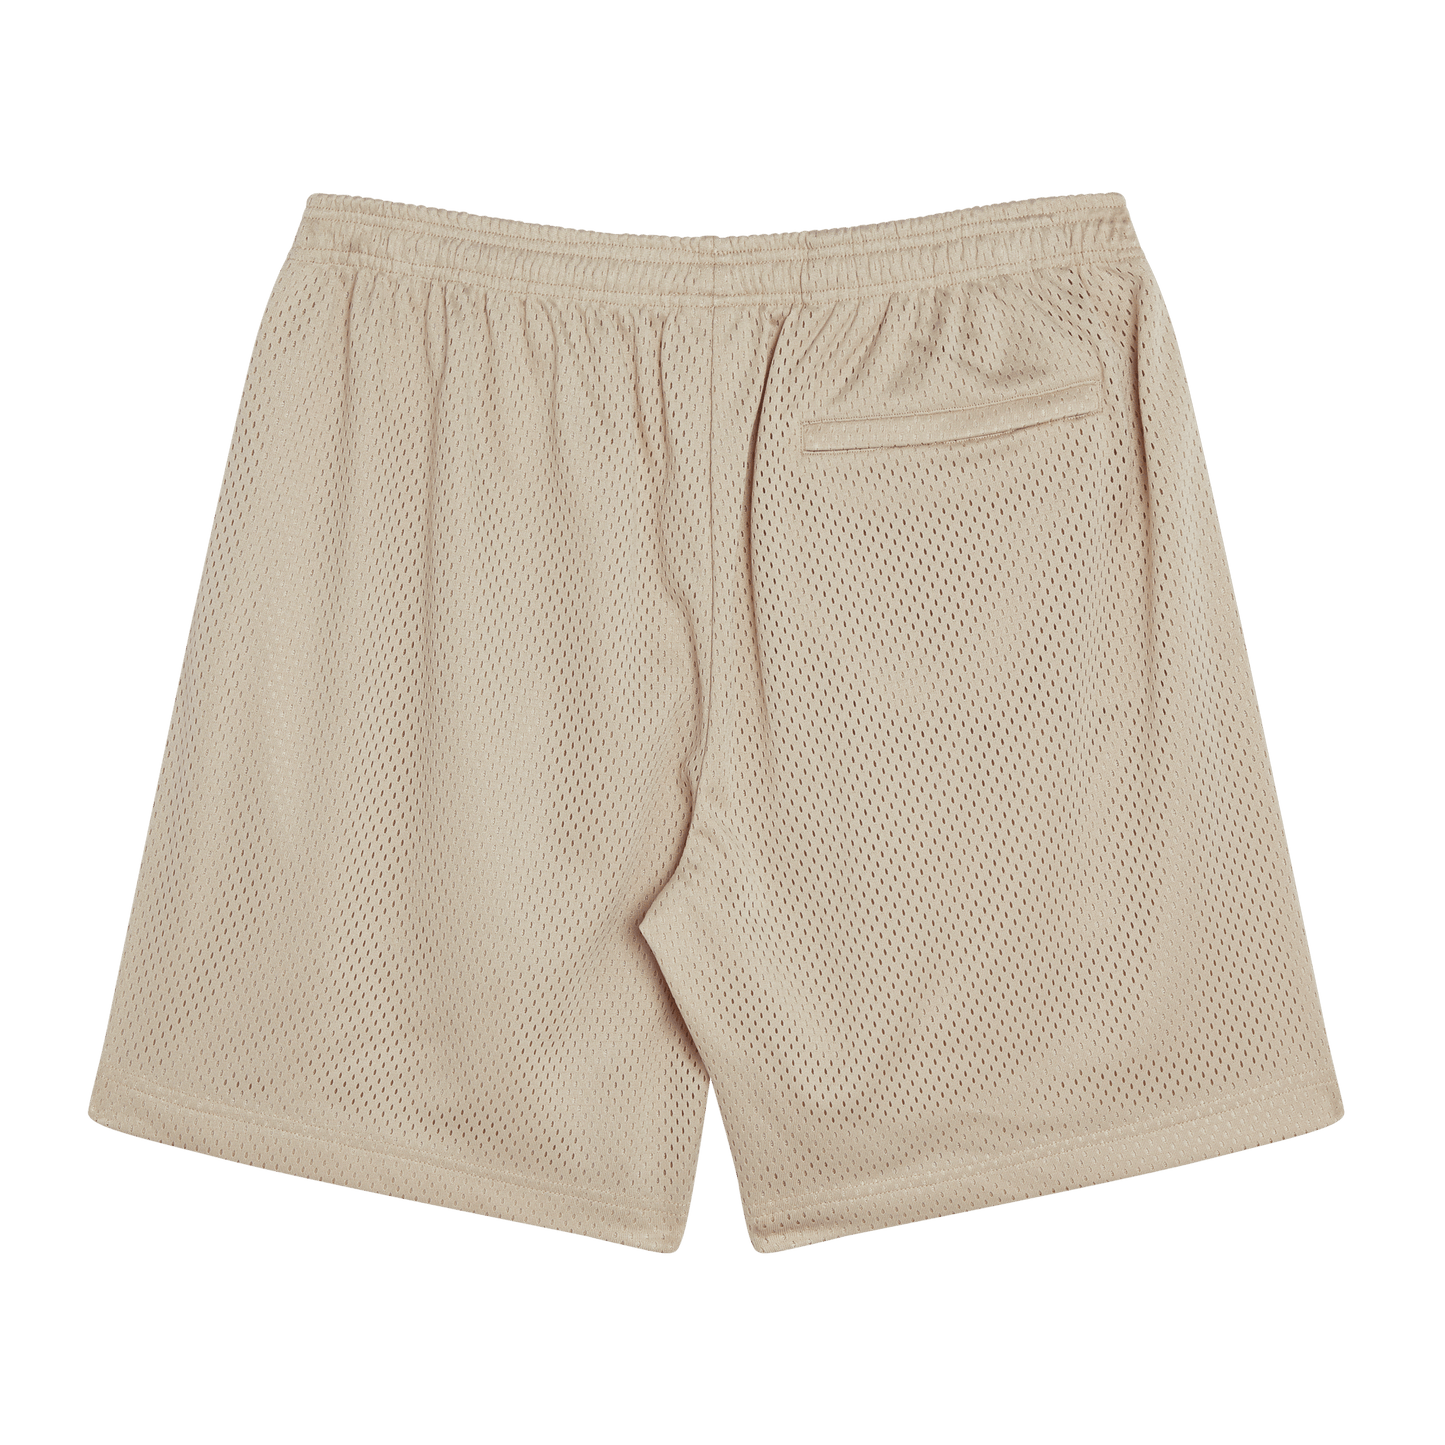 React Training Shorts - Tan  Training shorts, Shorts, Mesh shorts